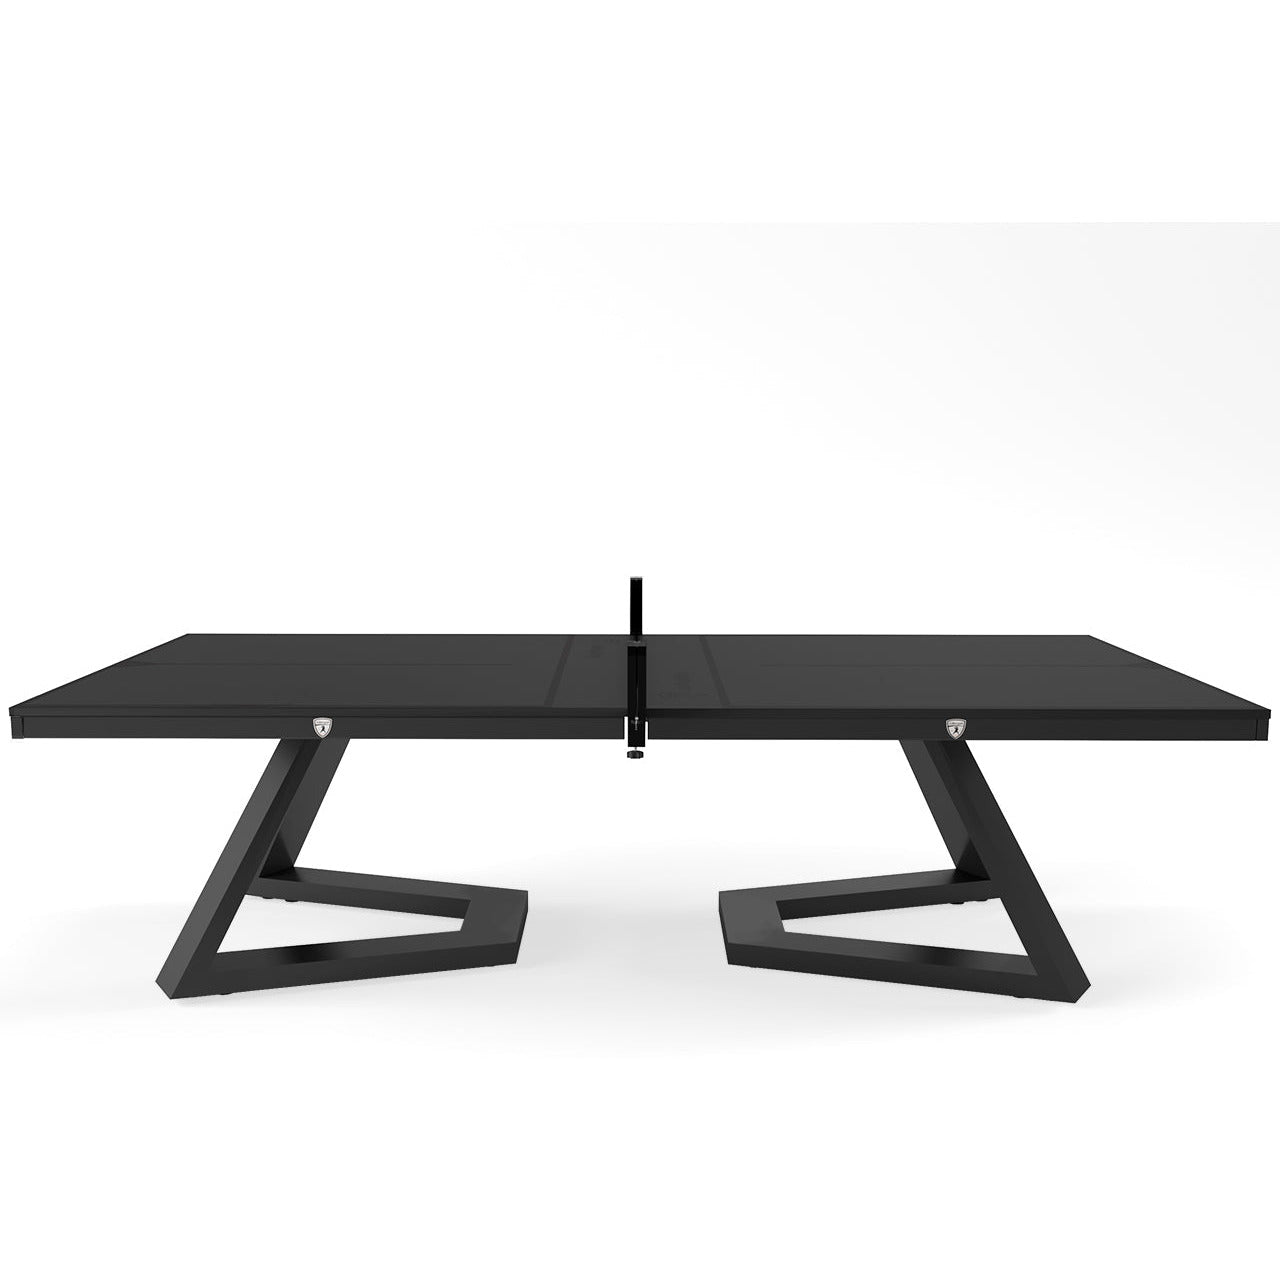 Killerspin SVR daVinci Table Tennis Table(SKU301-83)